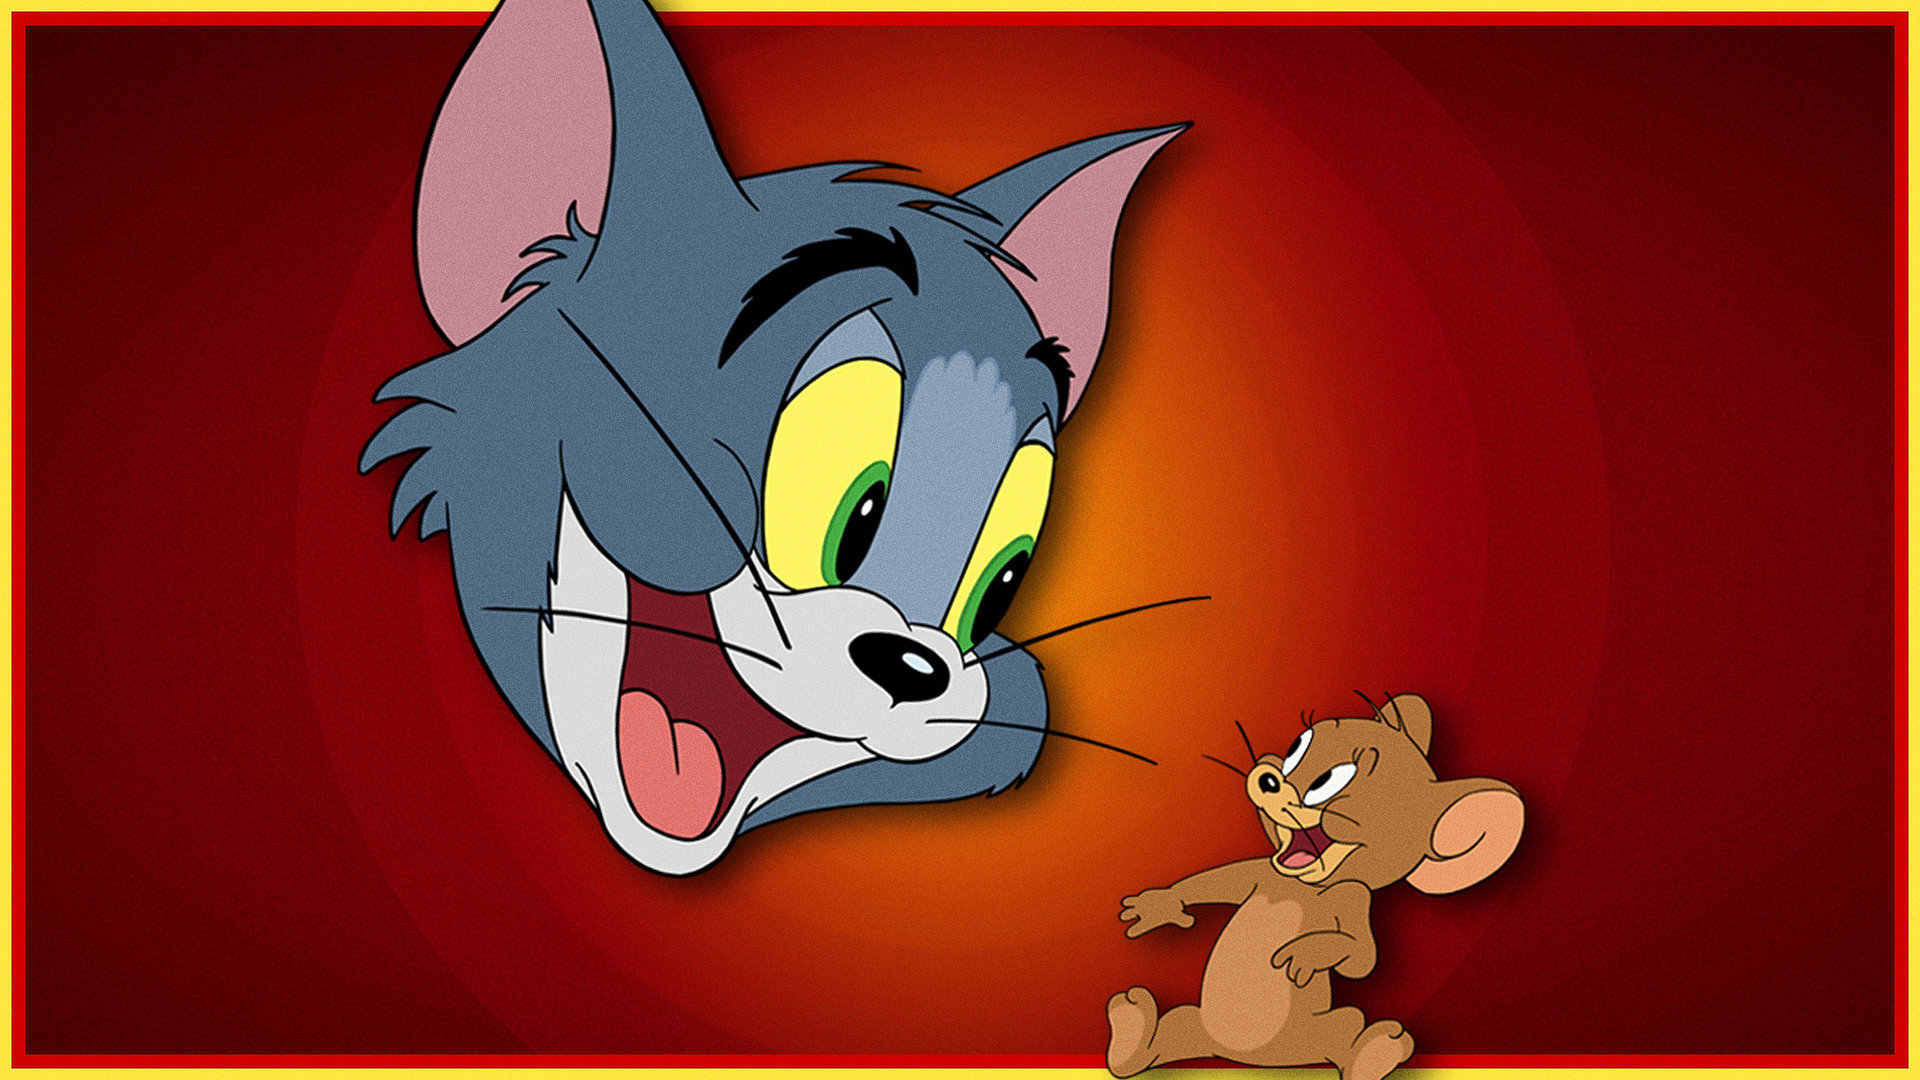 Tom & Jerry